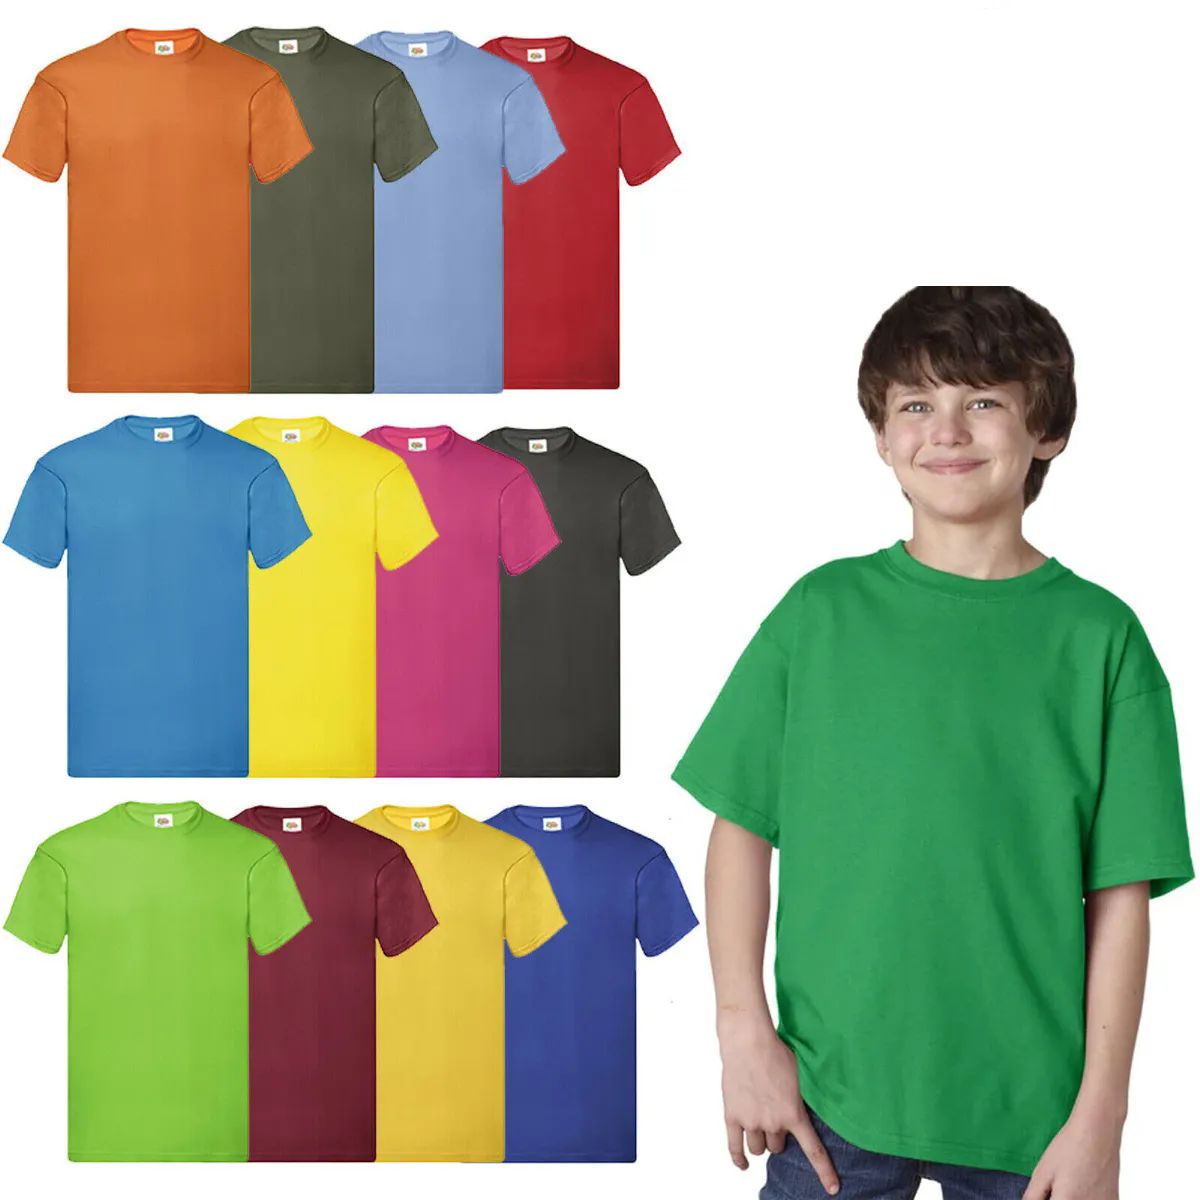 288 Wholesale Billion Hats Kids Youth Cotton Assorted Colors T Shirts Size XL